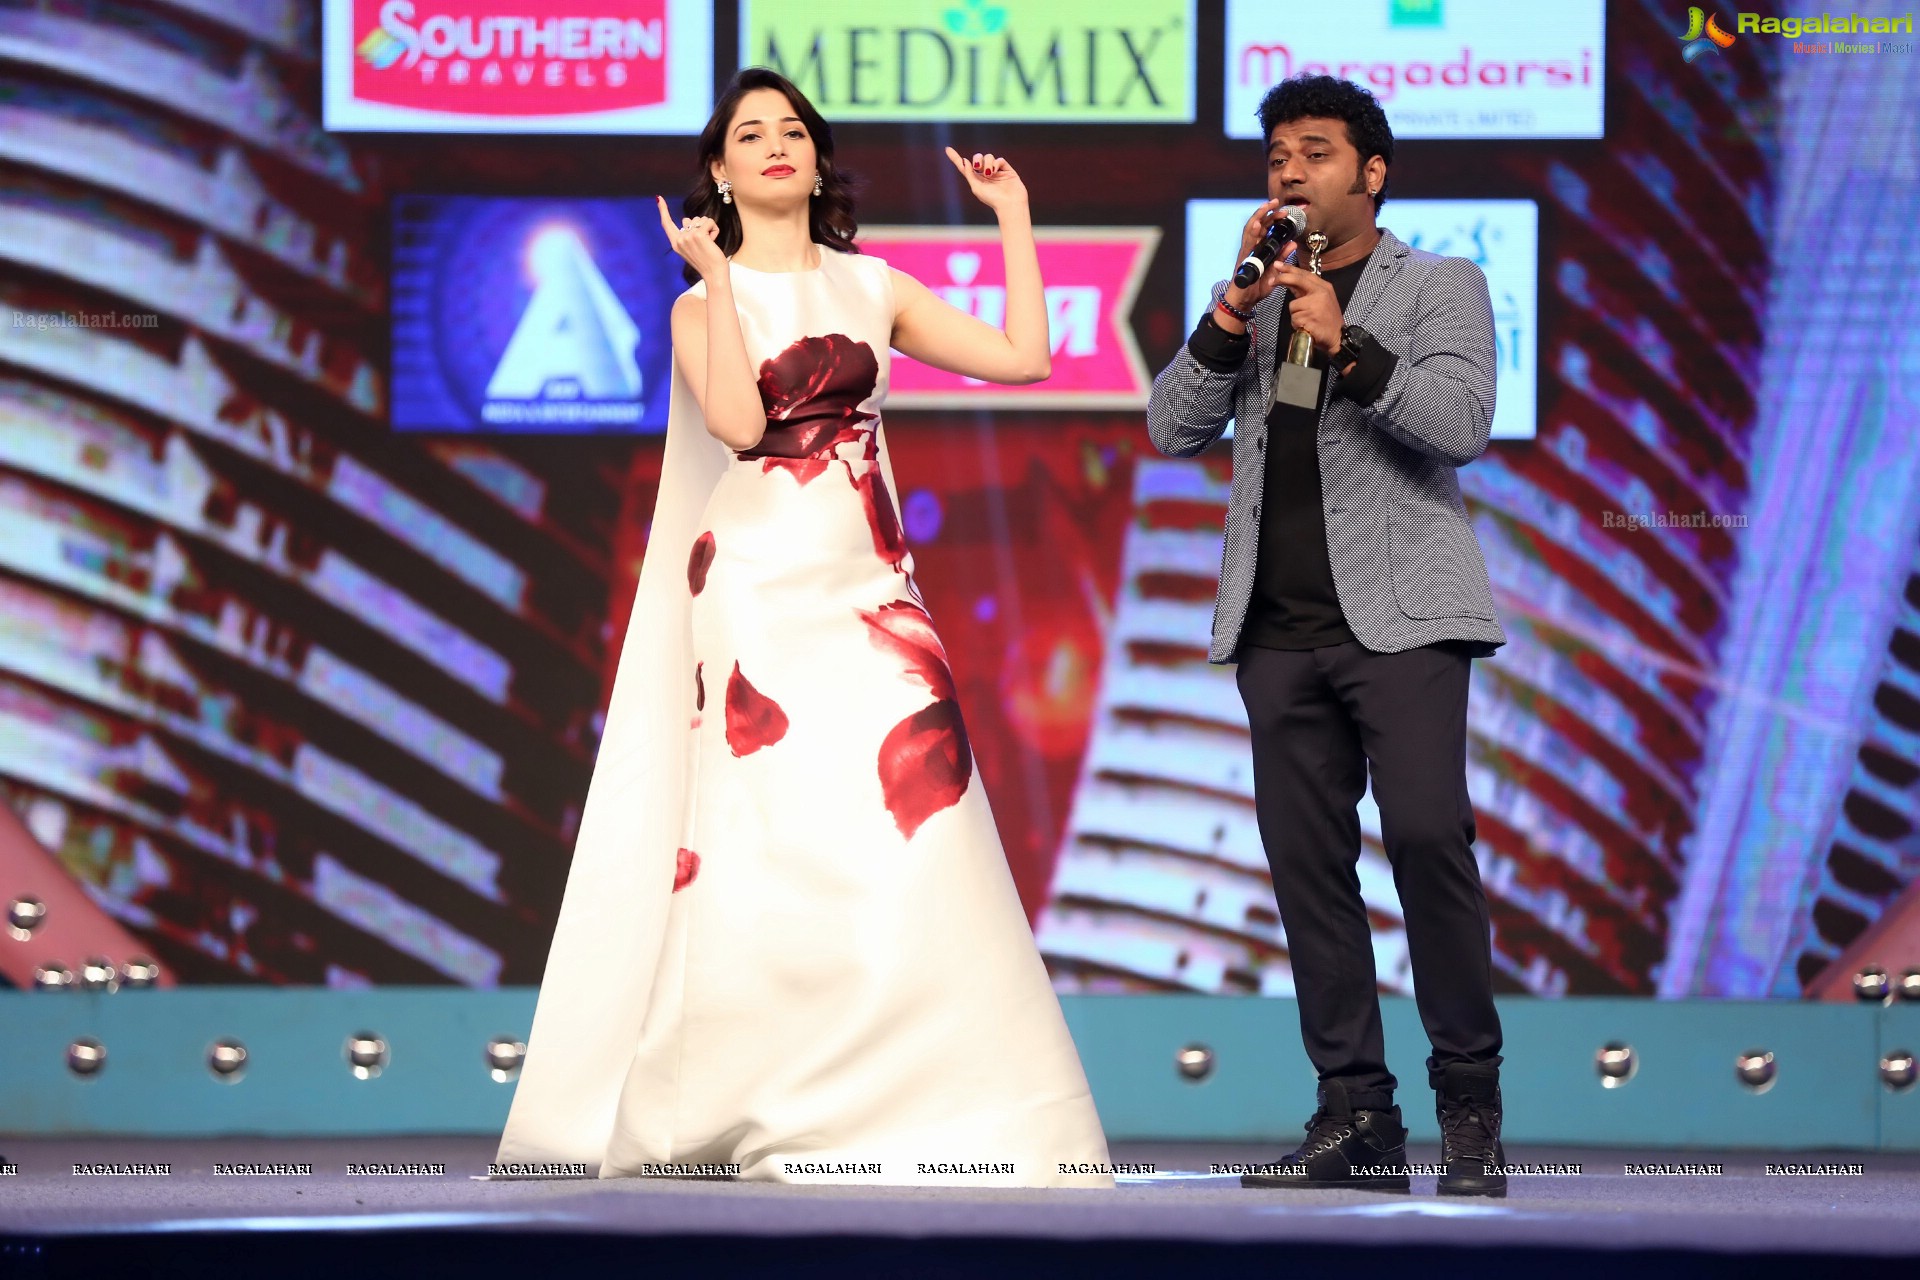 Gulf Andhra Music Awards (GAMA) 2015 in Dubai